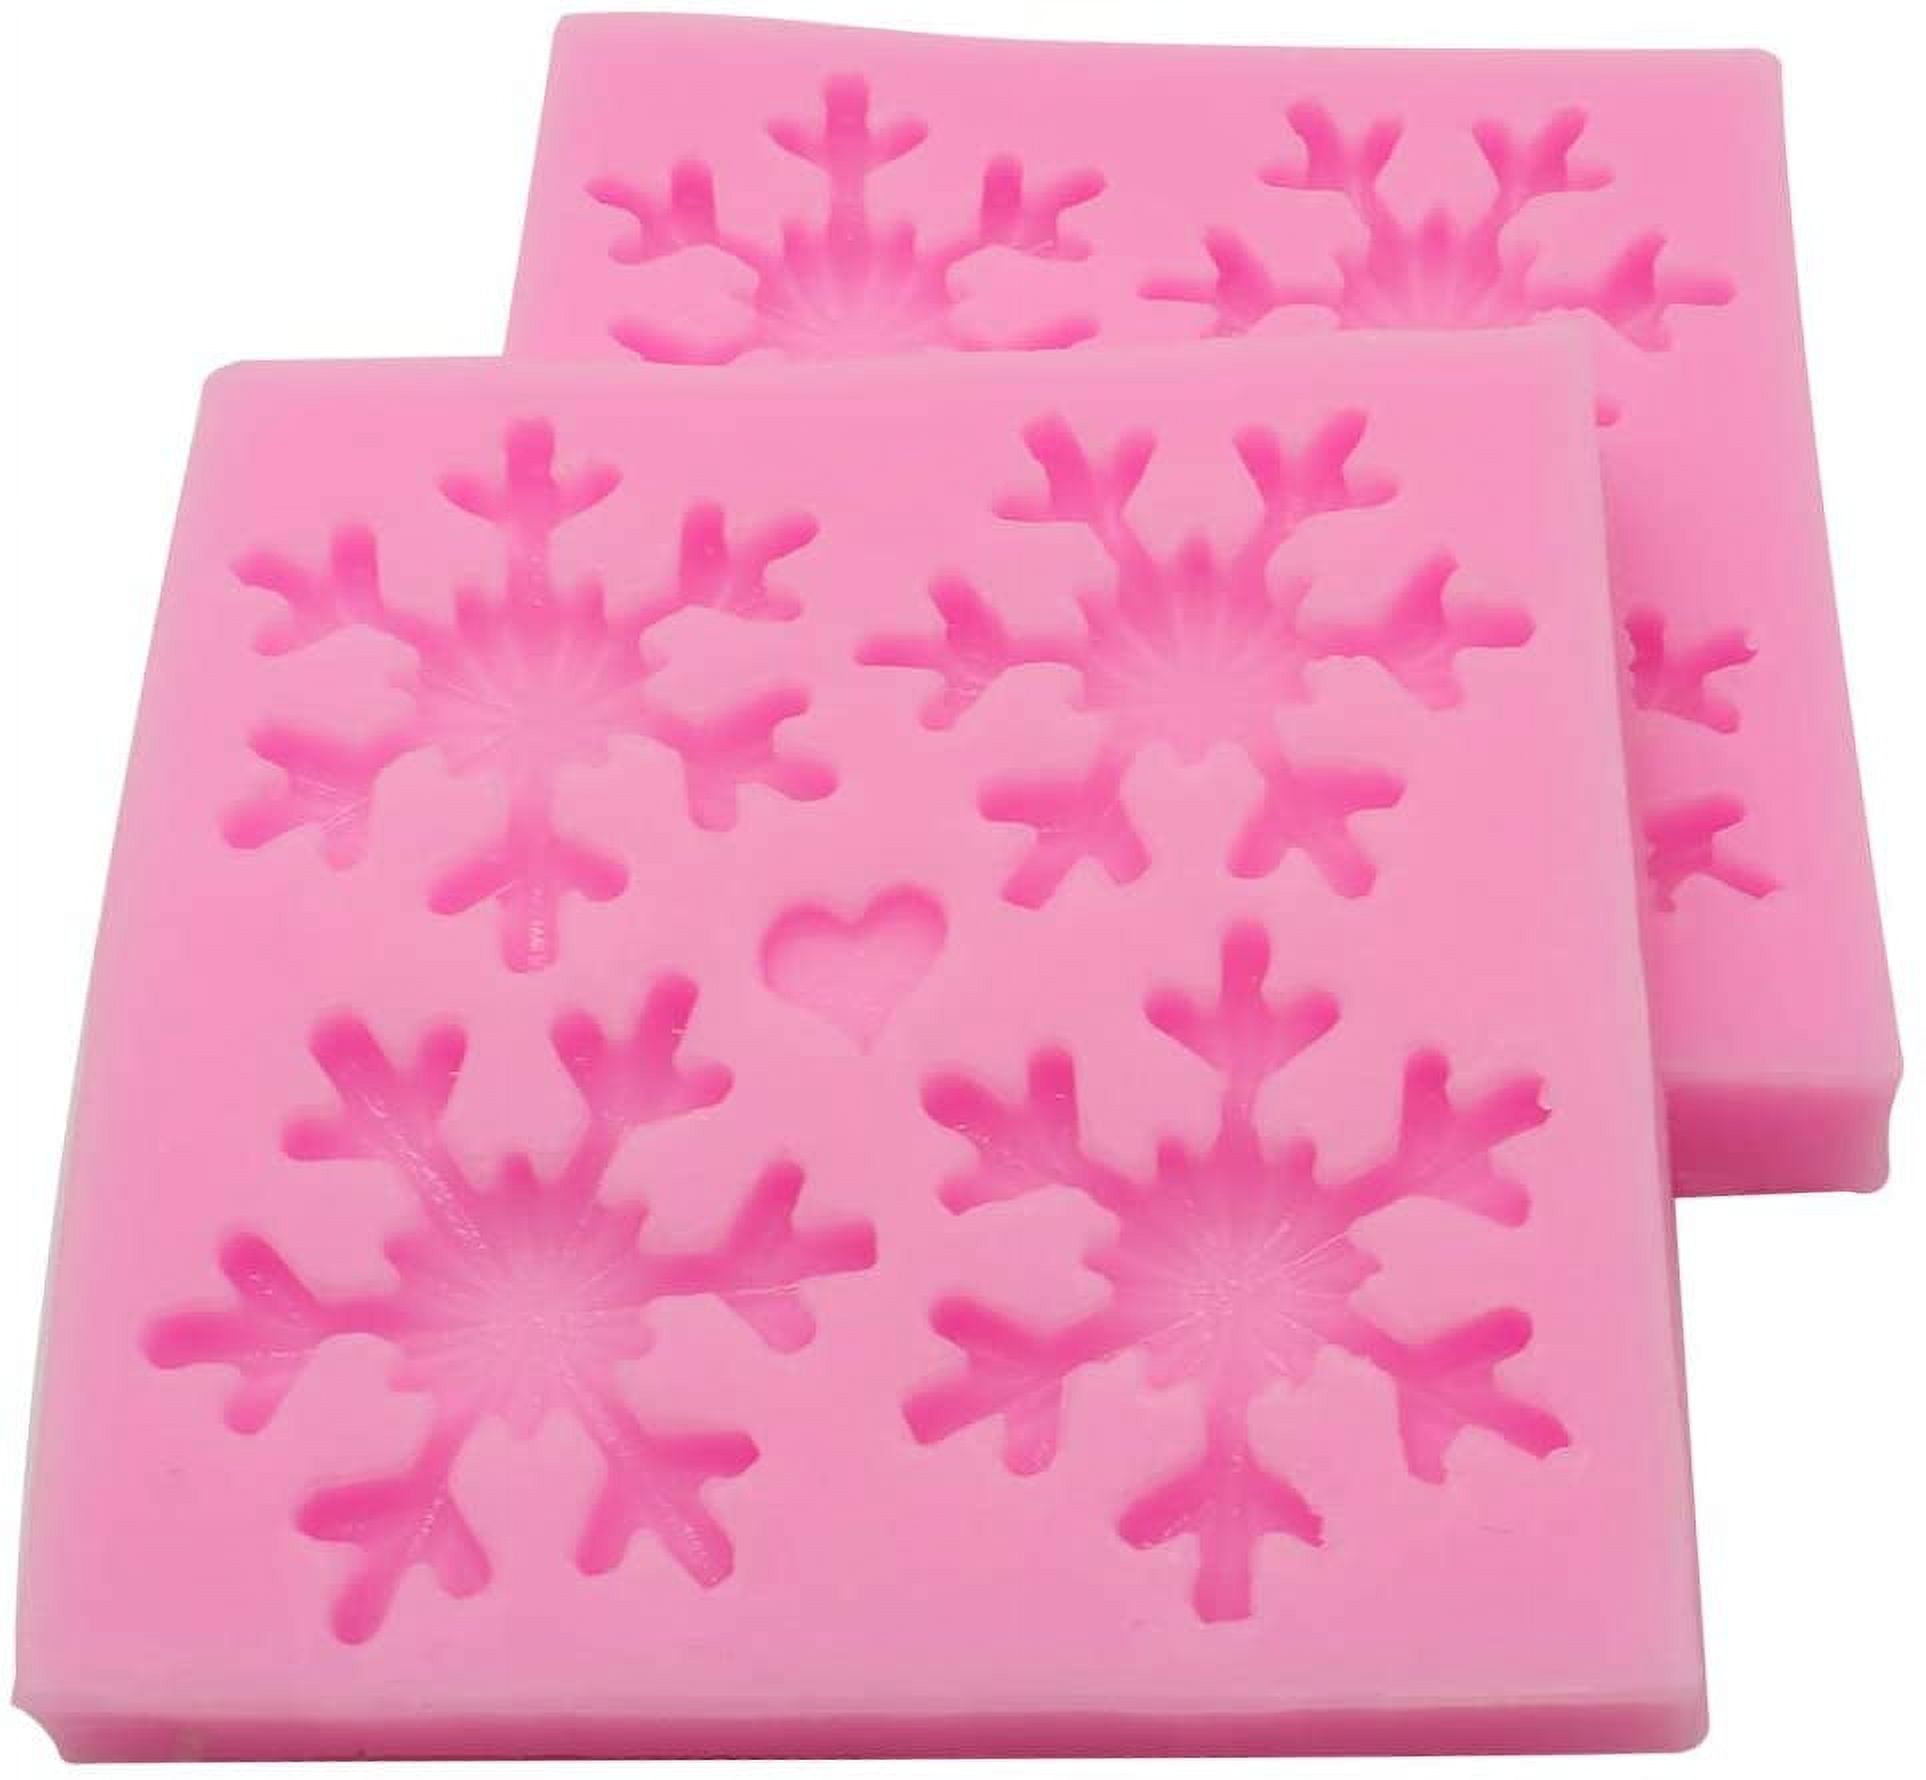 Snowflake Silicone Mold To Make Pretty Cake - Inspire Uplift